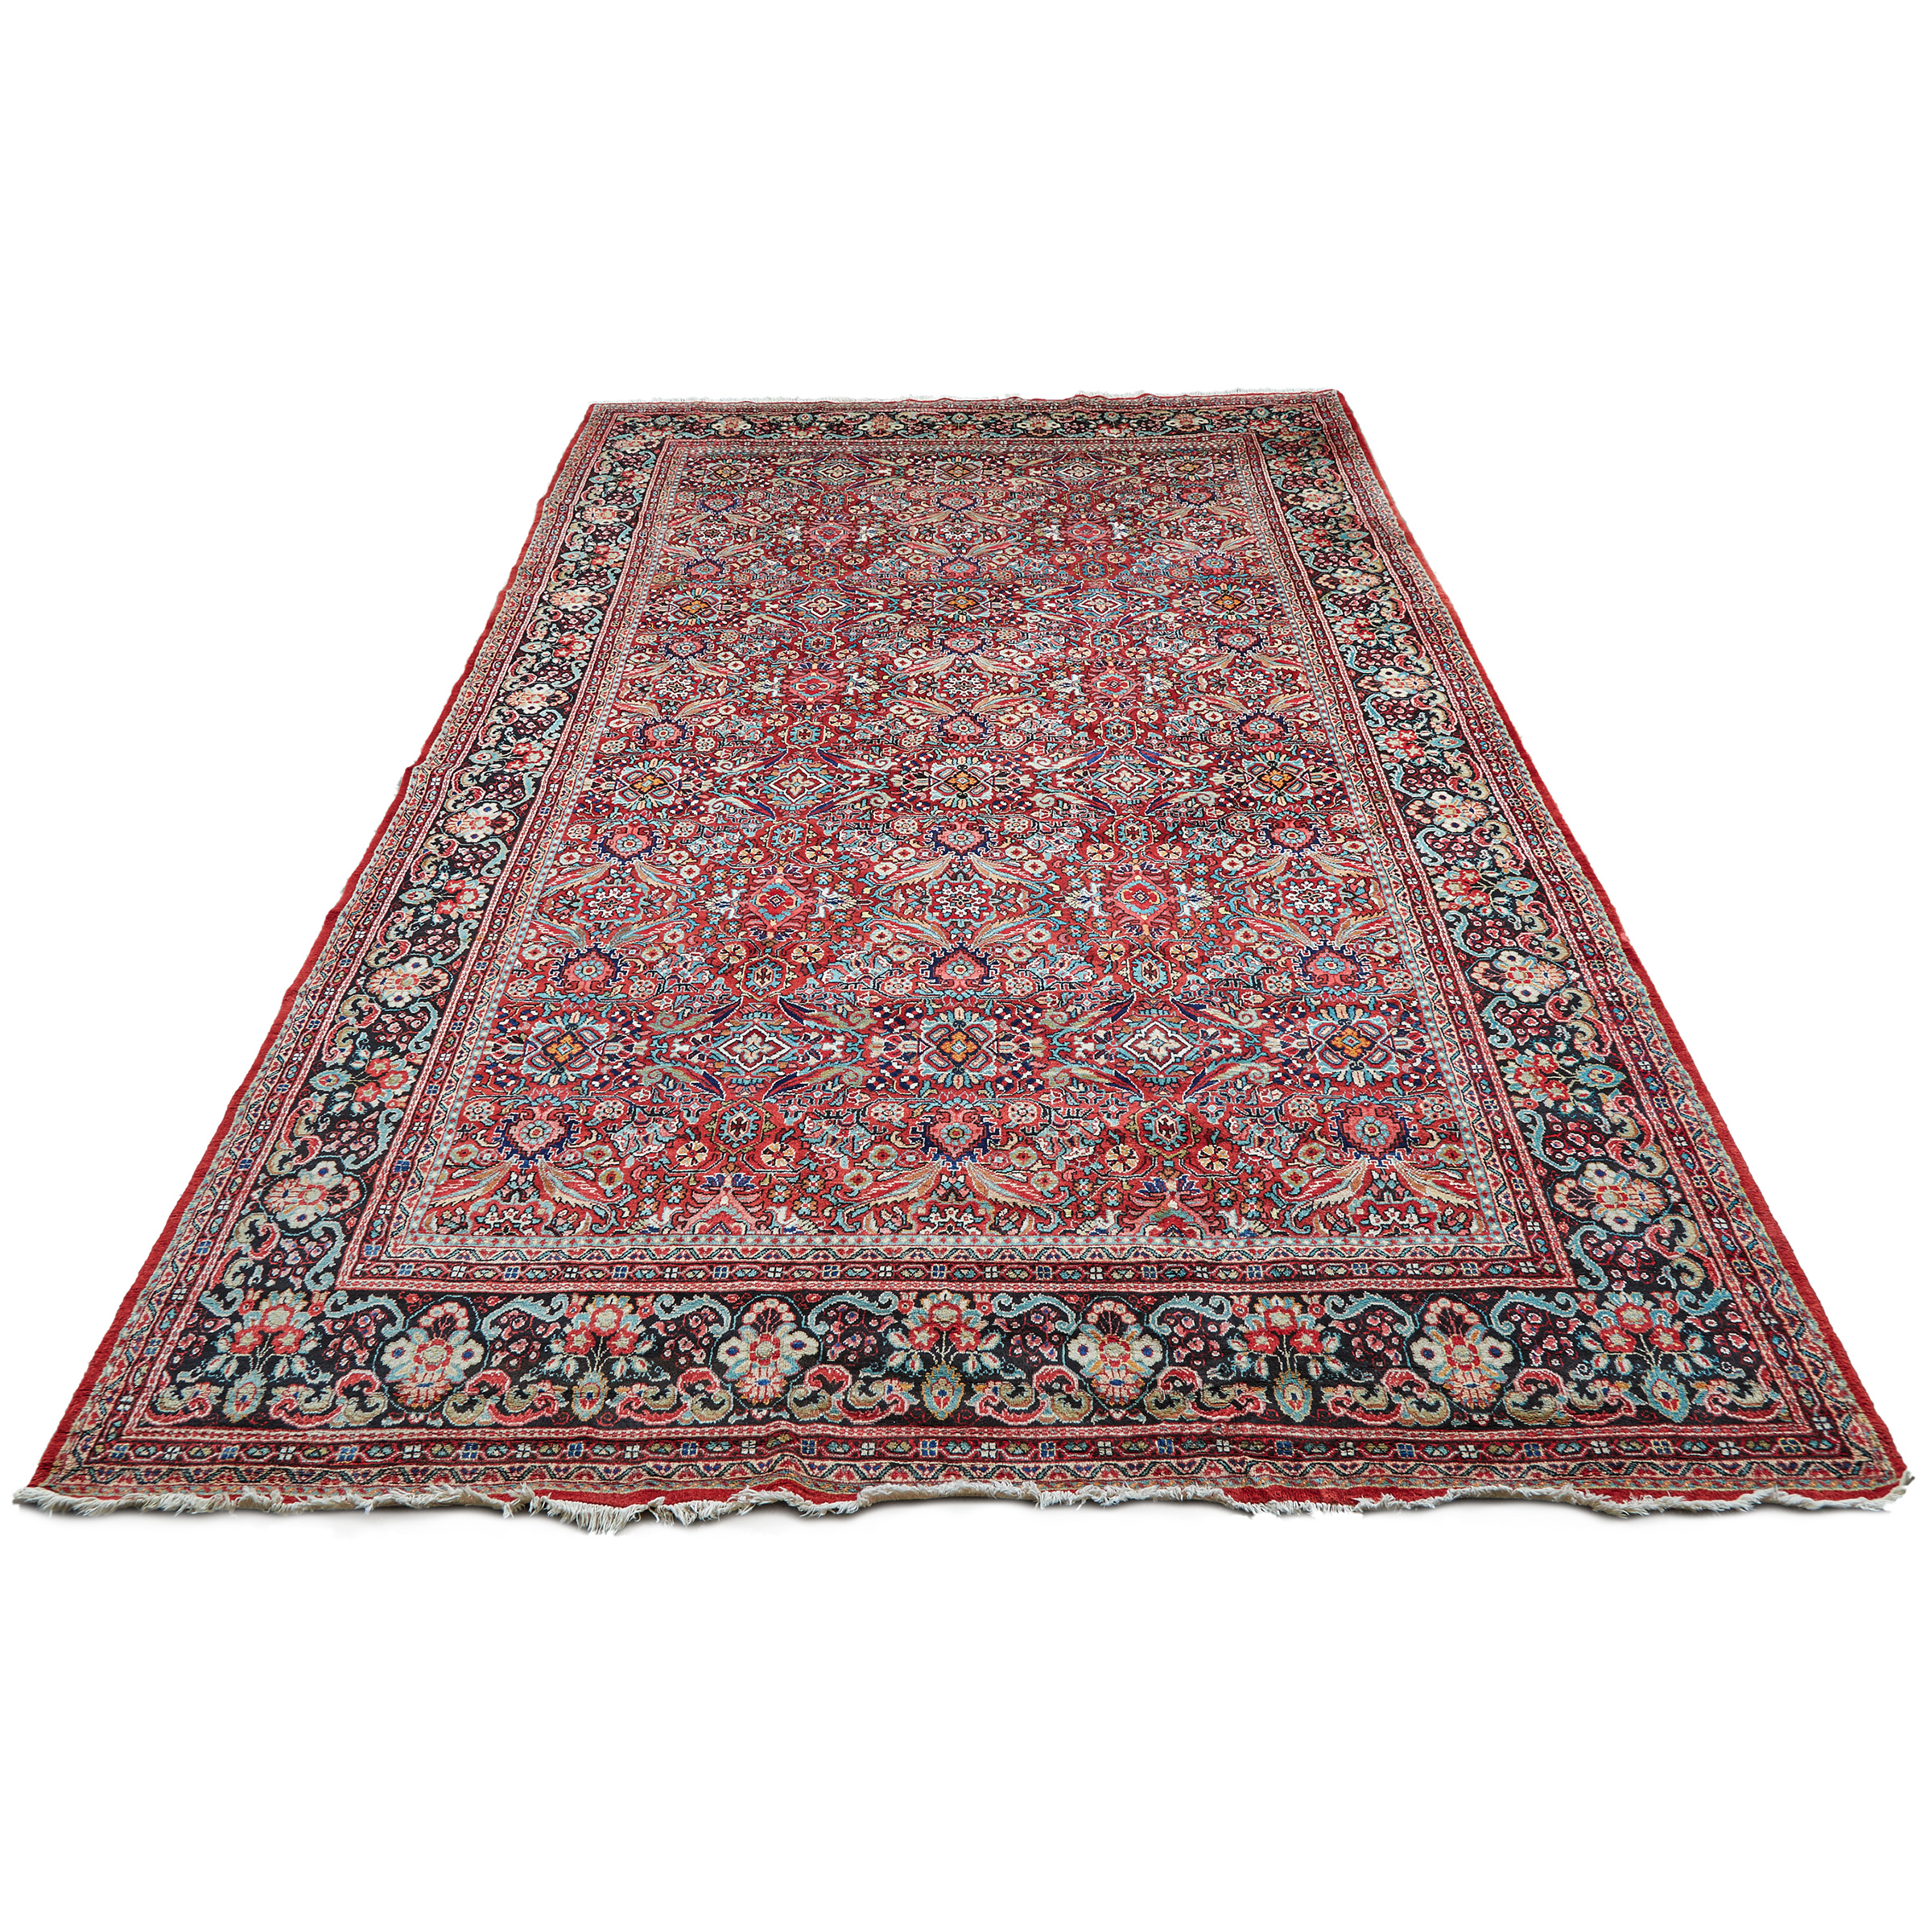 Mahal Carpet, Persian, mid 20th century